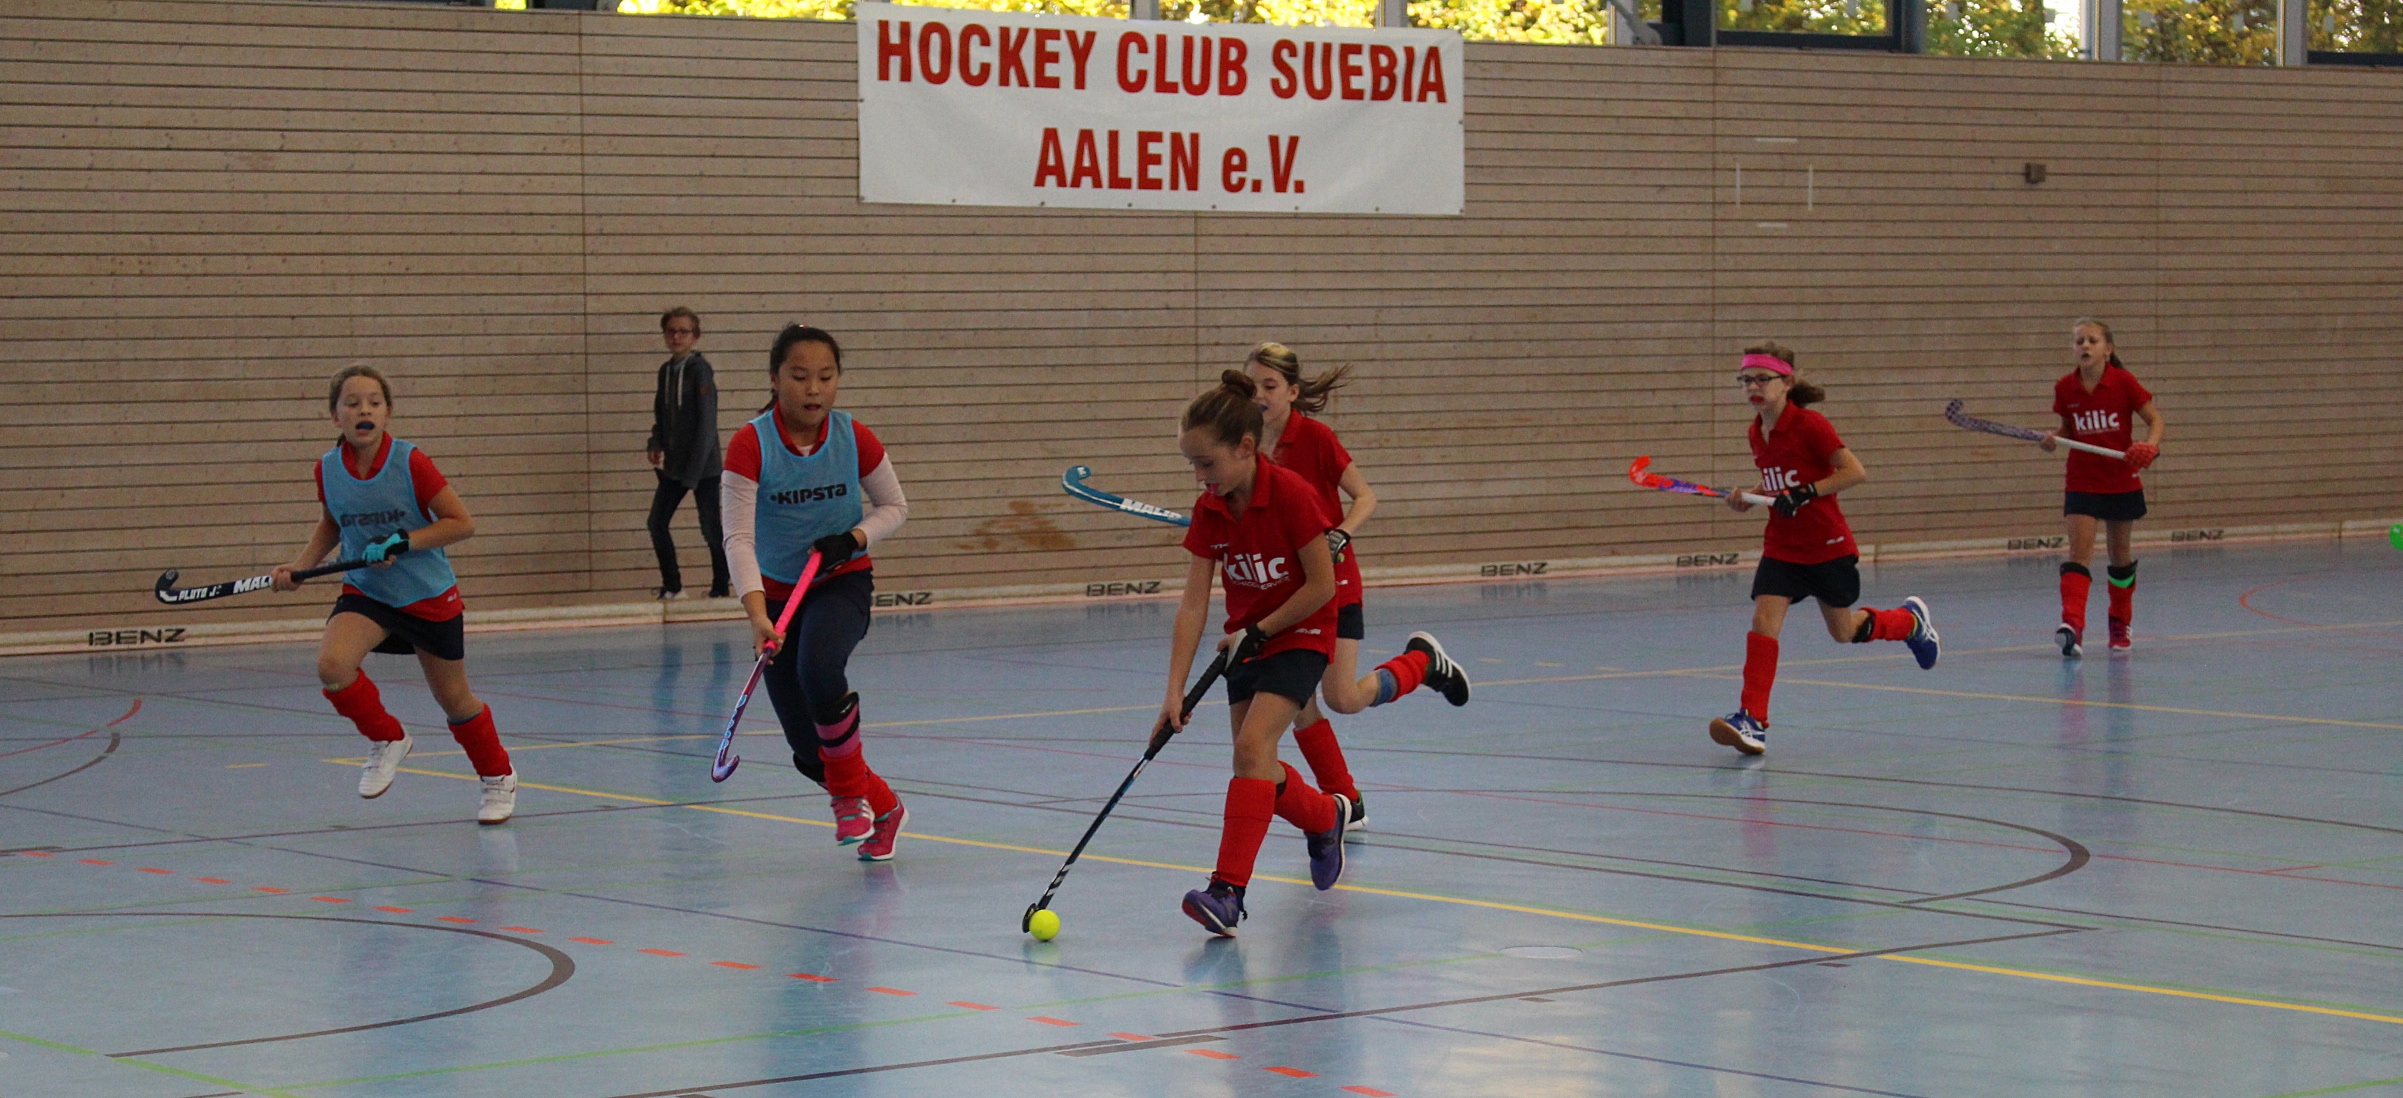 Hockey: Suebia-Mädchen-Cup in Aalen 28-29.10.17